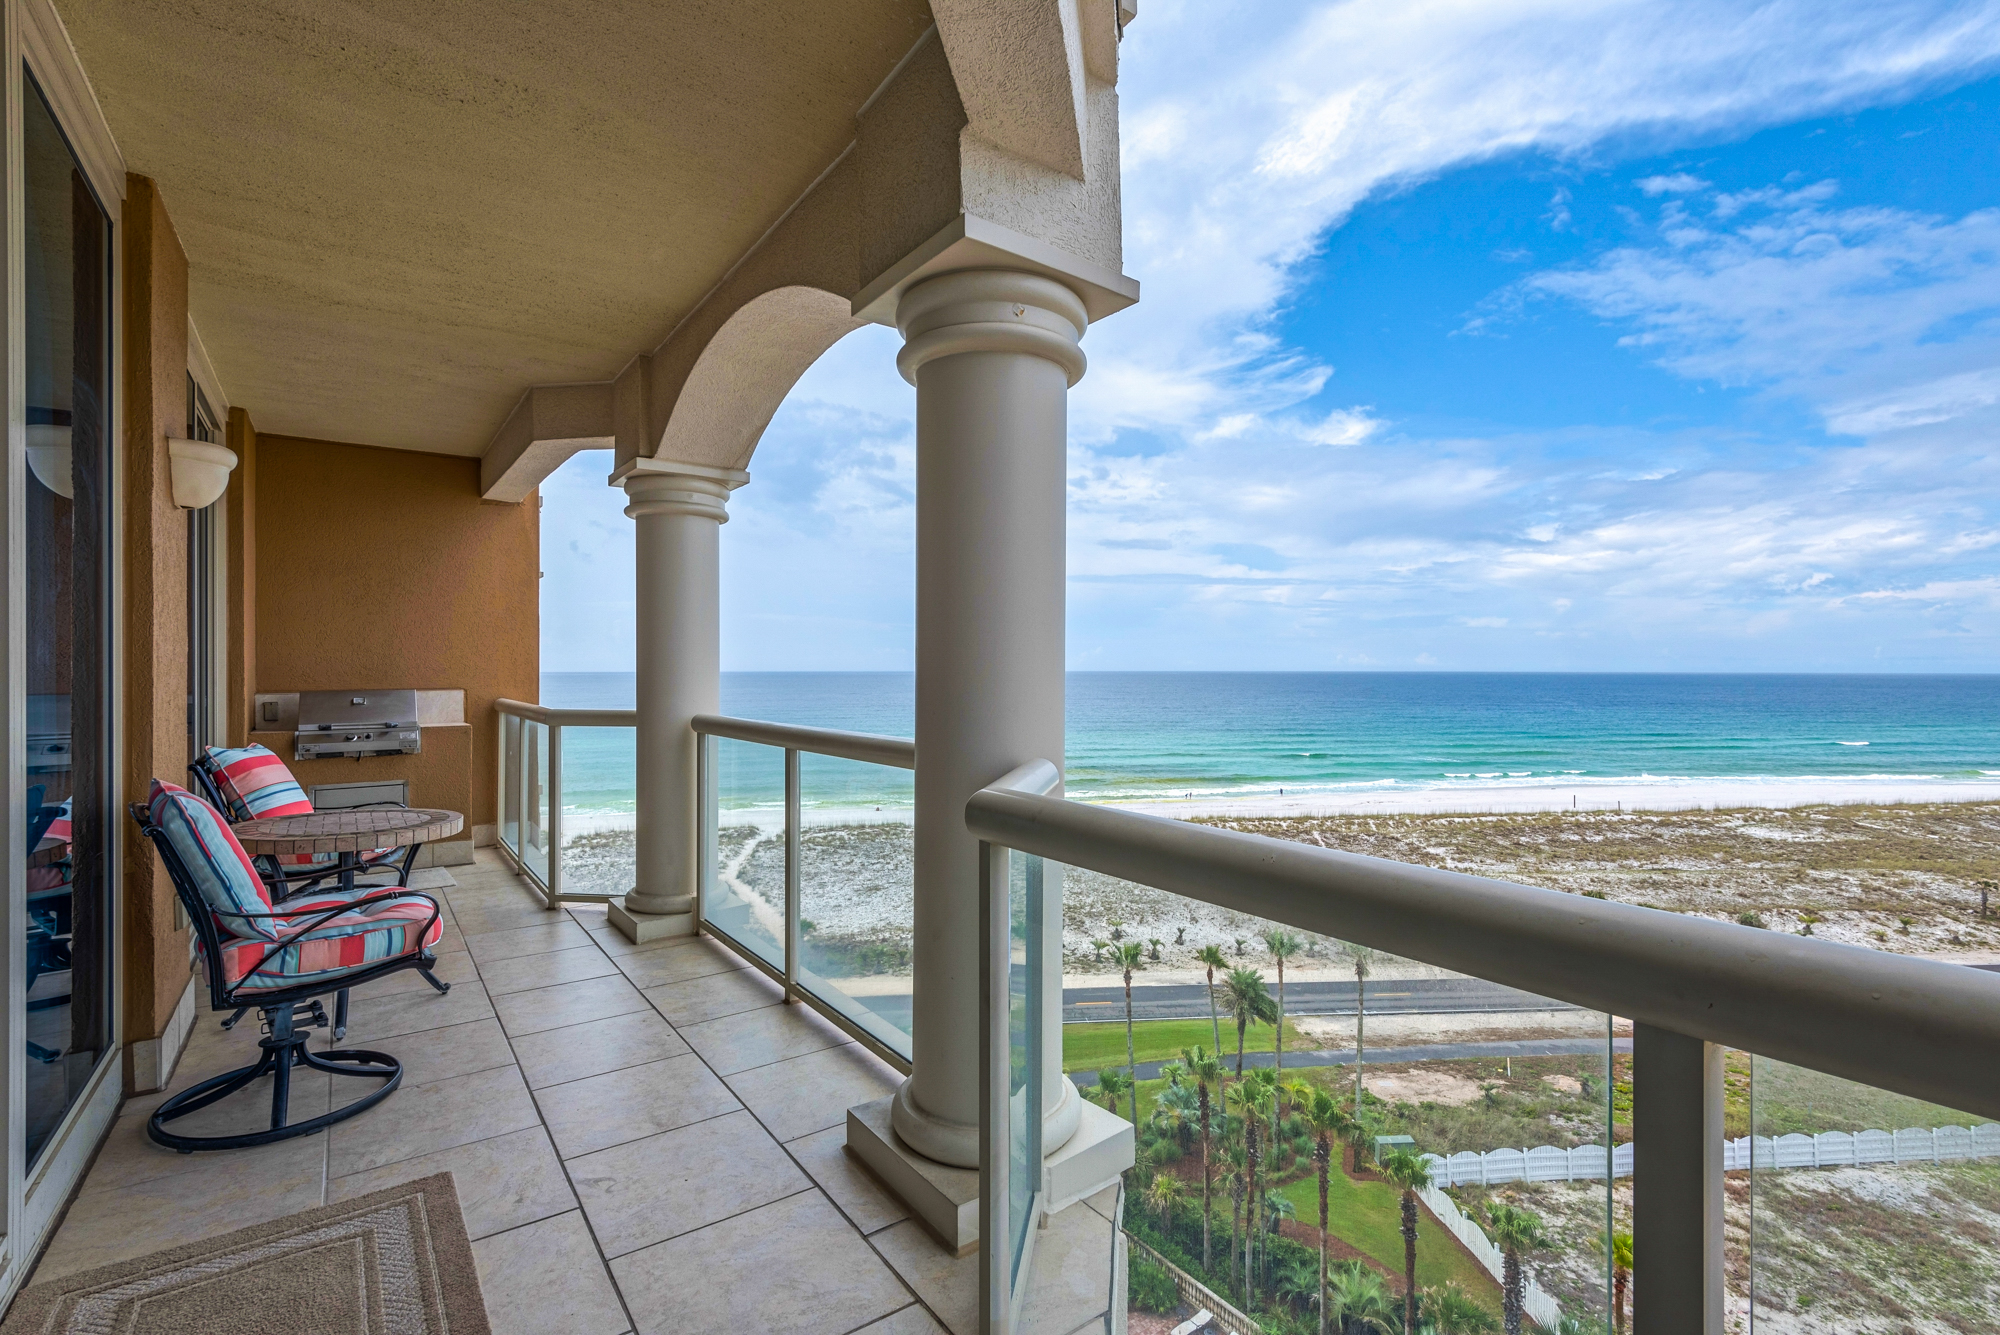 Balcony view of the Gulf Coast, beach, palm trees, white sands.